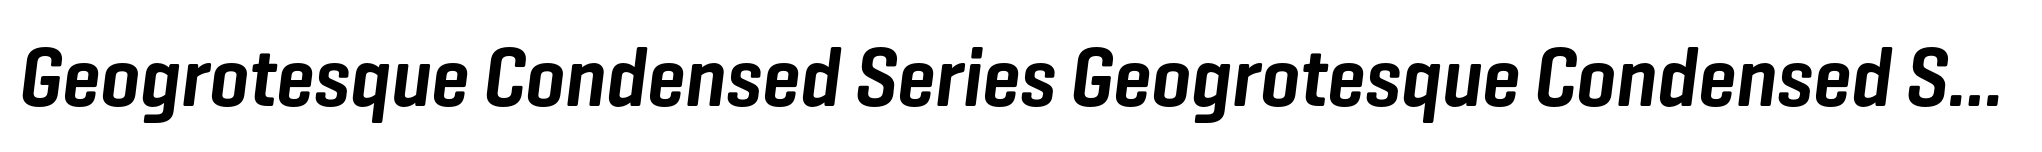 Geogrotesque Condensed Series Geogrotesque Condensed Semi Bold Italic image